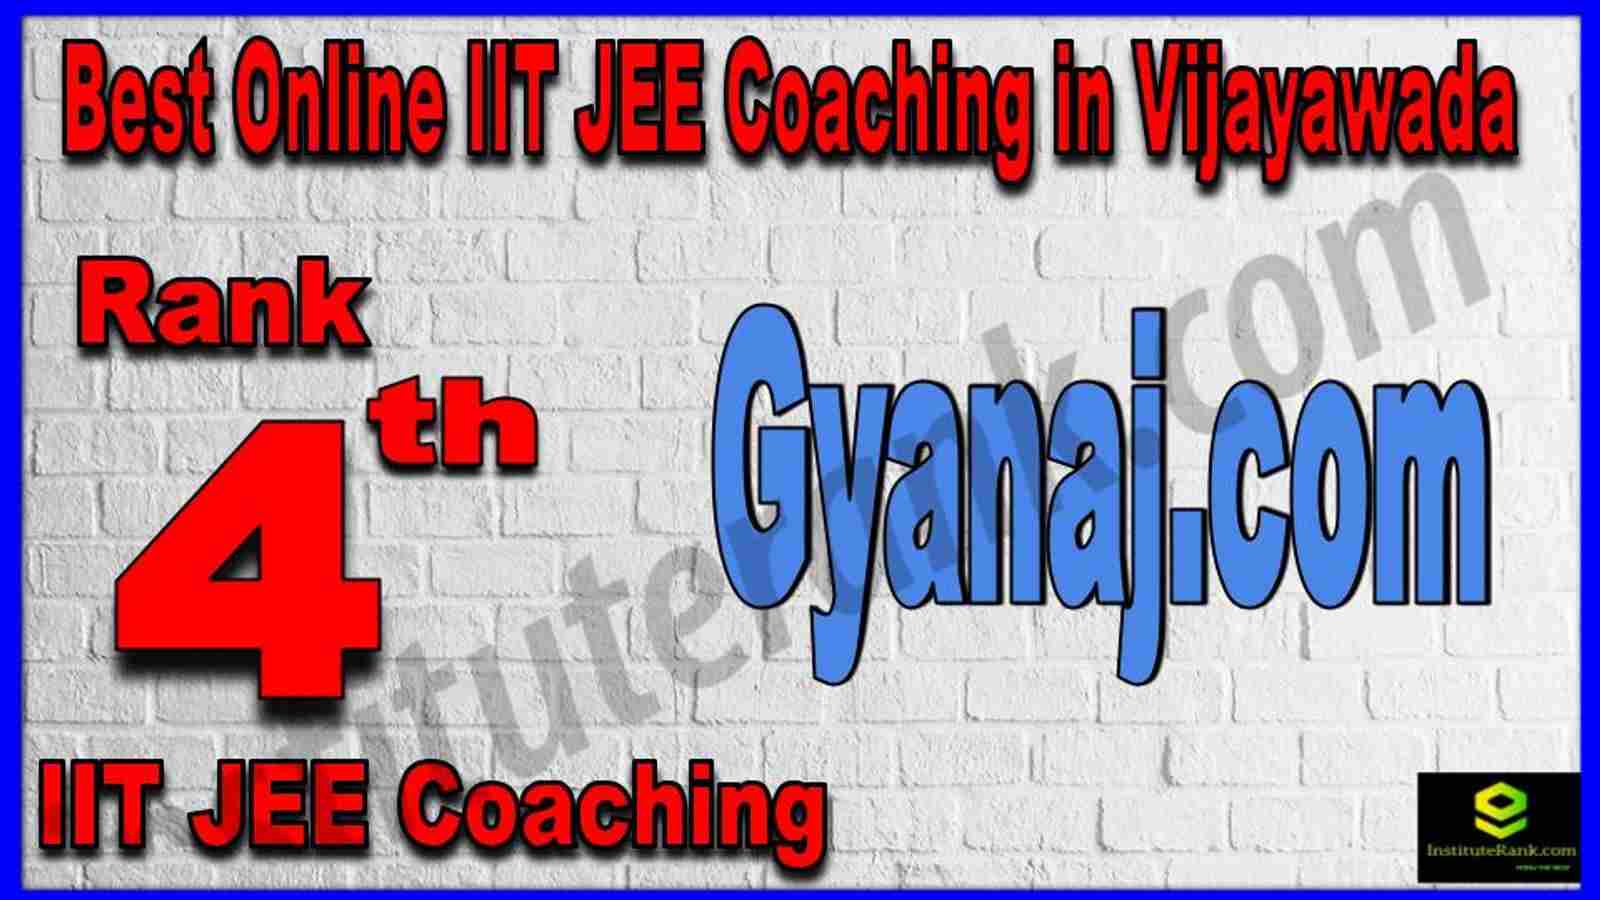 Rank 4th Best Online IIT JEE Coaching in Vijayawada